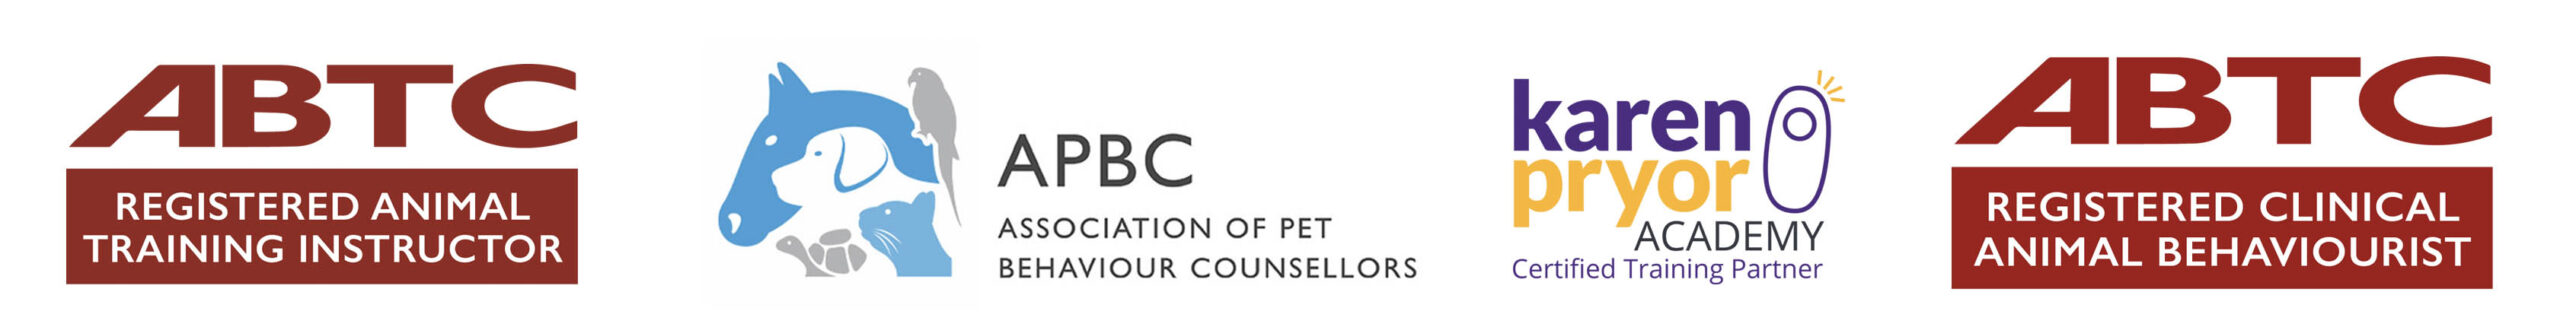 ABTC Clinical Animal Behaviourist